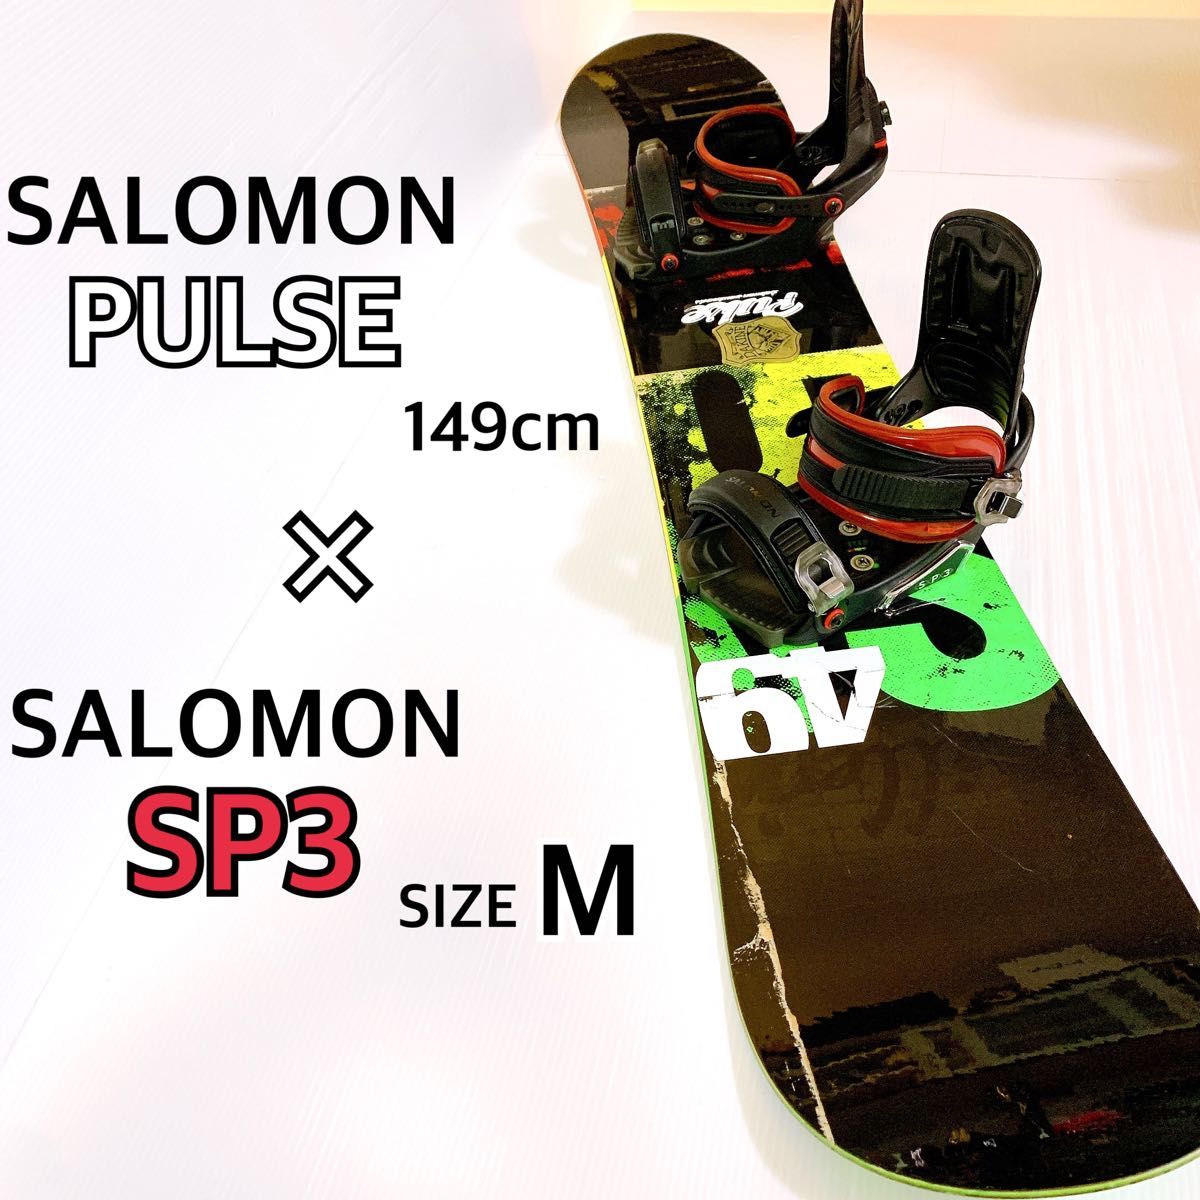 SALOMON PULSE × SALOMON SP3 セット - ruizvillandiego.com